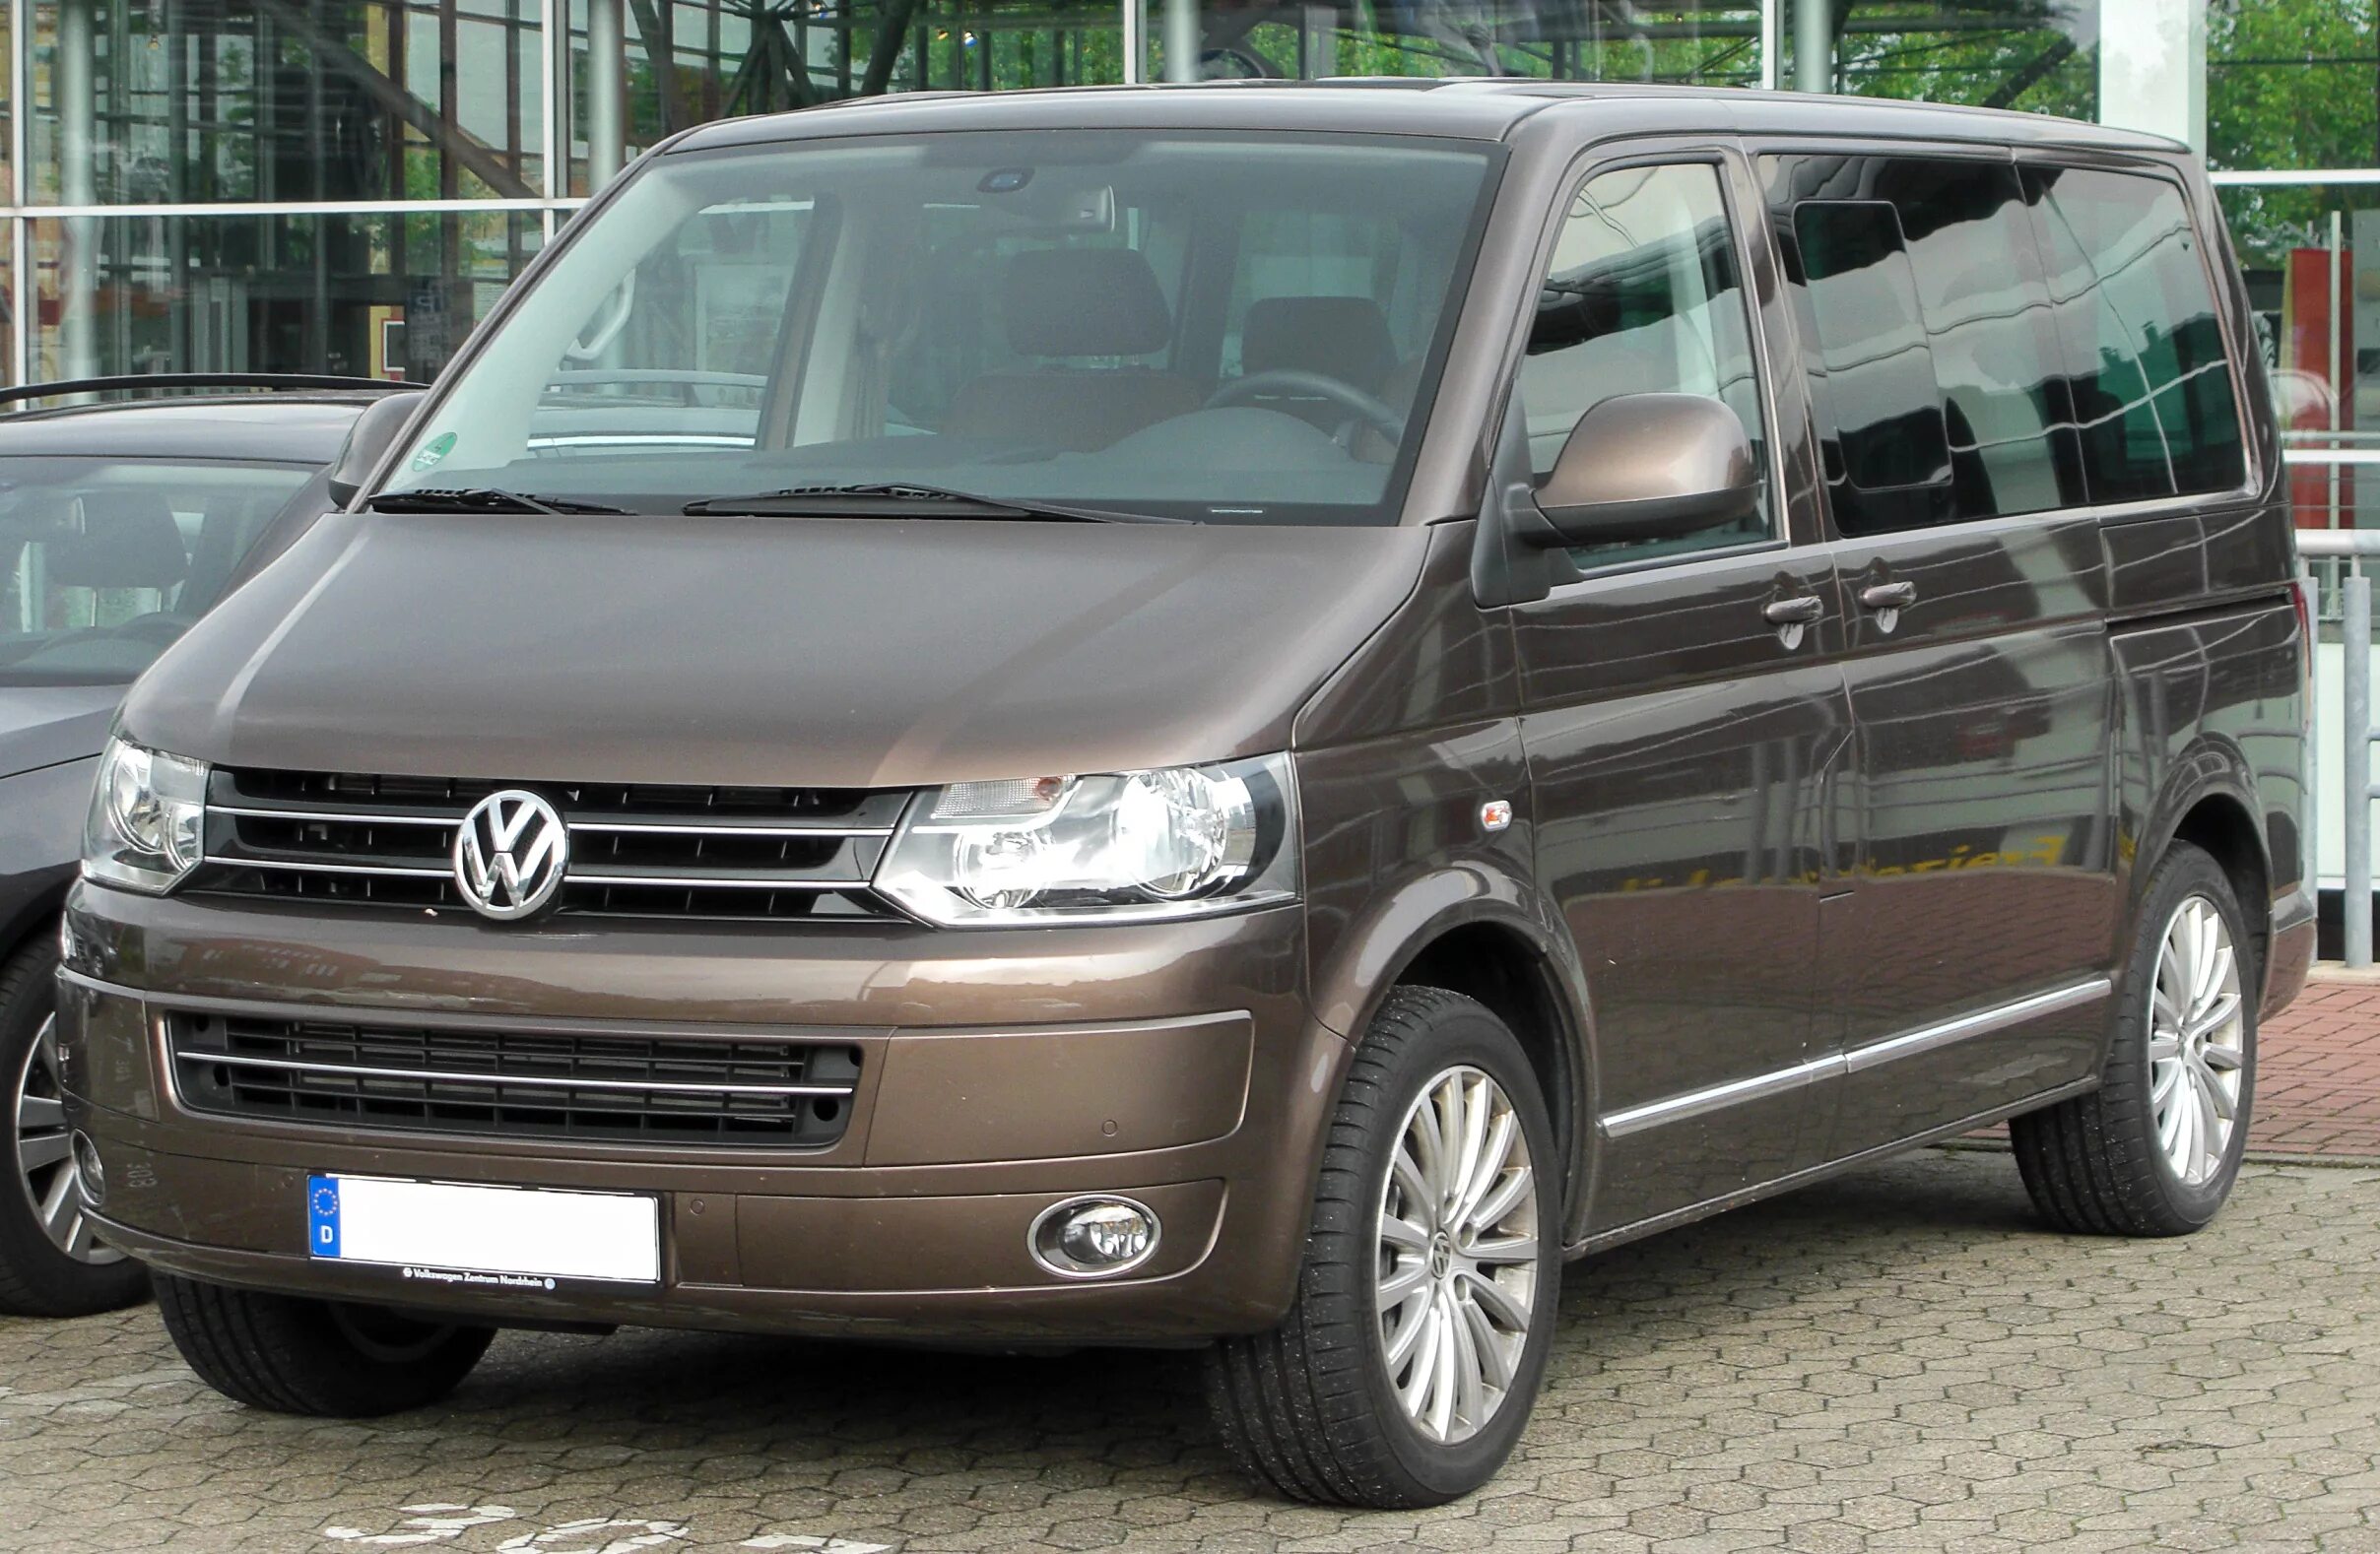 VW Multivan t5. Volkswagen t5 2010. VW Transporter t5 Multivan. Минивэн Volkswagen t5 2010. Фольксваген т5 мультиван